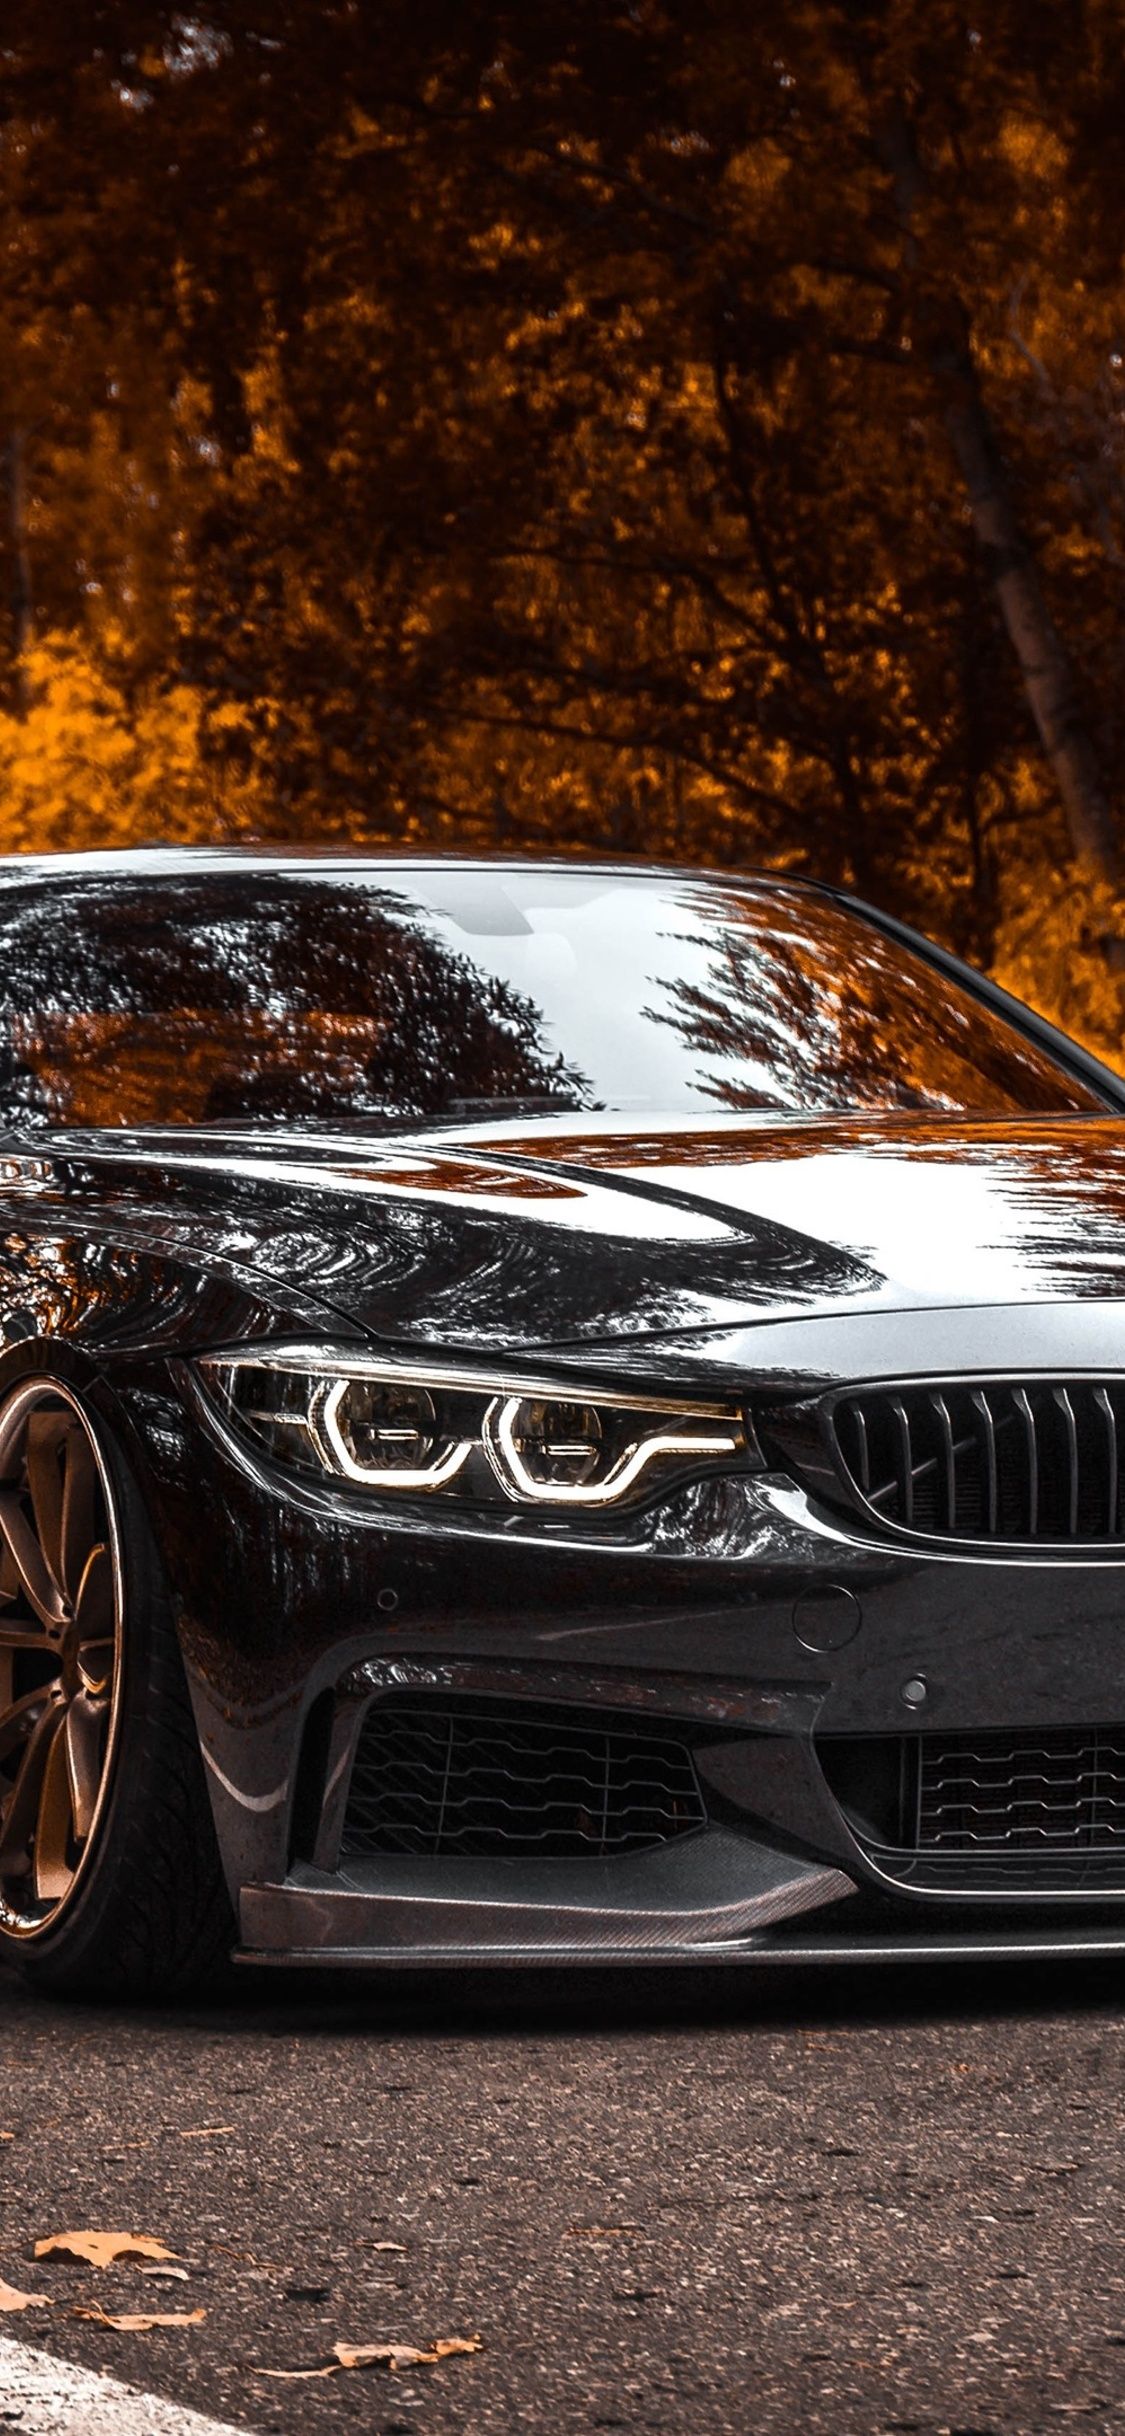 BMW Tuning 4 Series Black Metallic 4k iPhone XS, iPhone